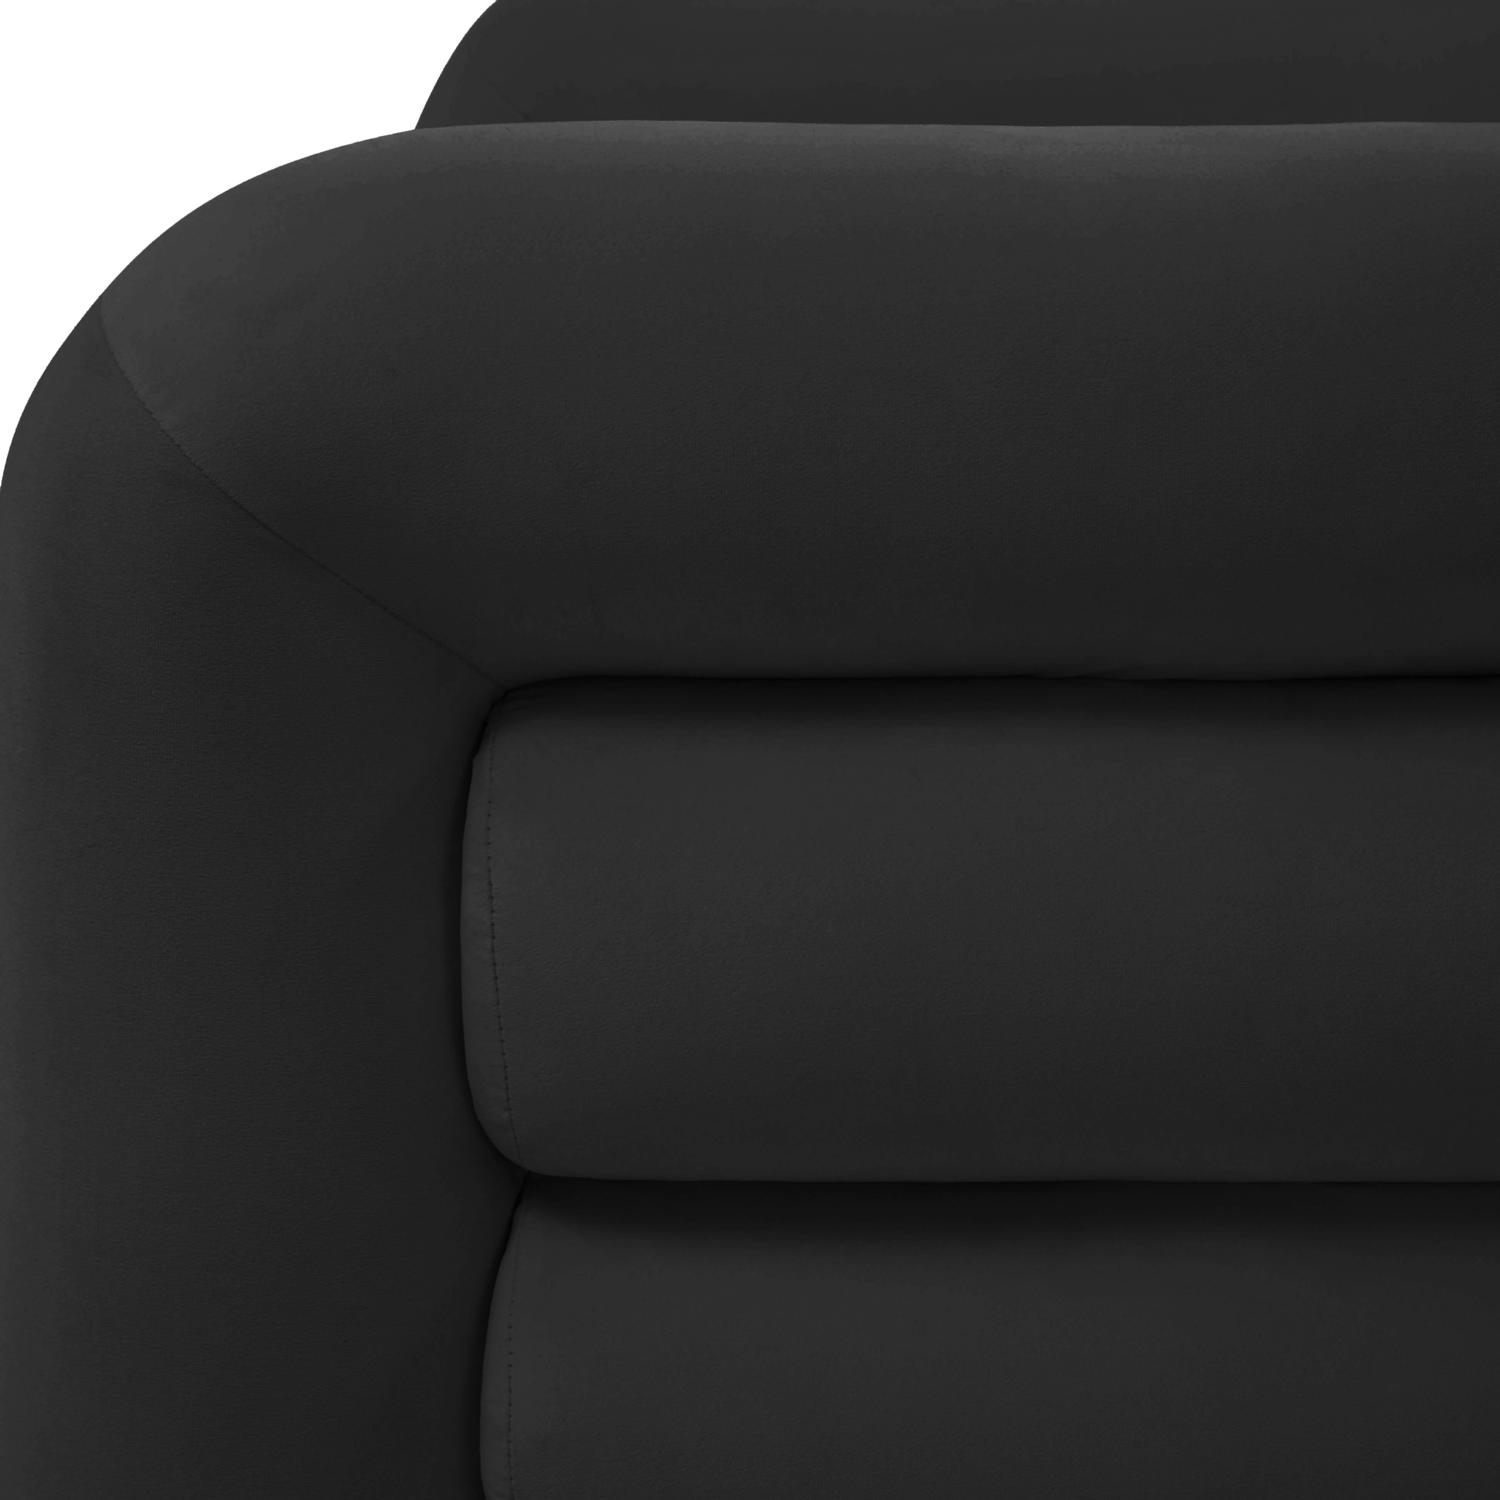 la chaise lounge Contemporary Design Furniture Accent Chairs Black